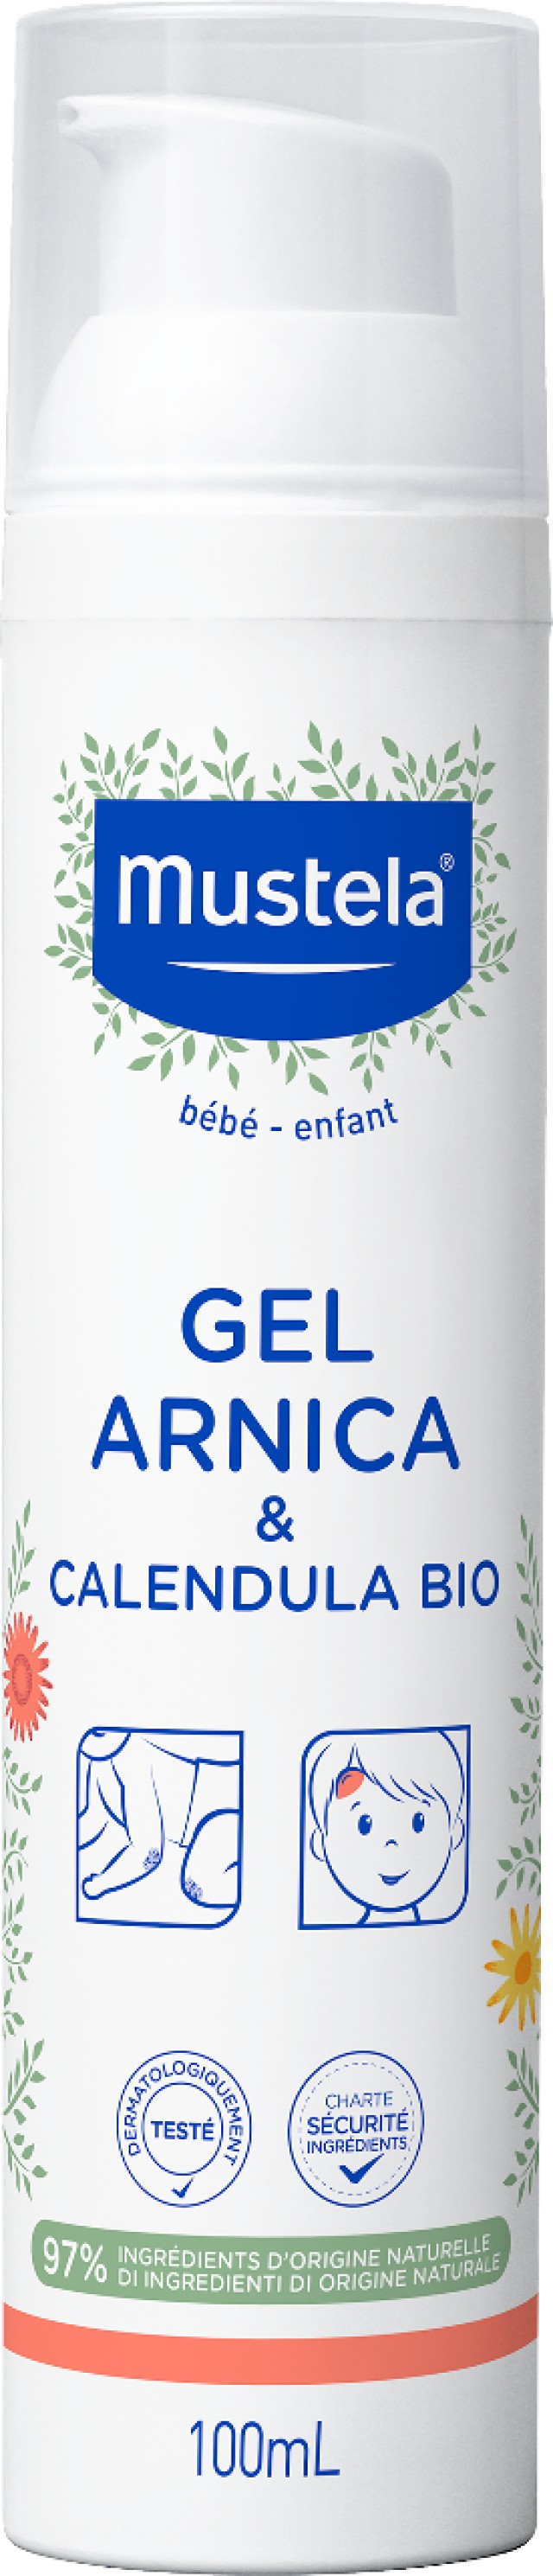 Mustela Gel Arnica & Calendula τζελ Άρνικας Με Βιολογική Καλέντουλα 100ml